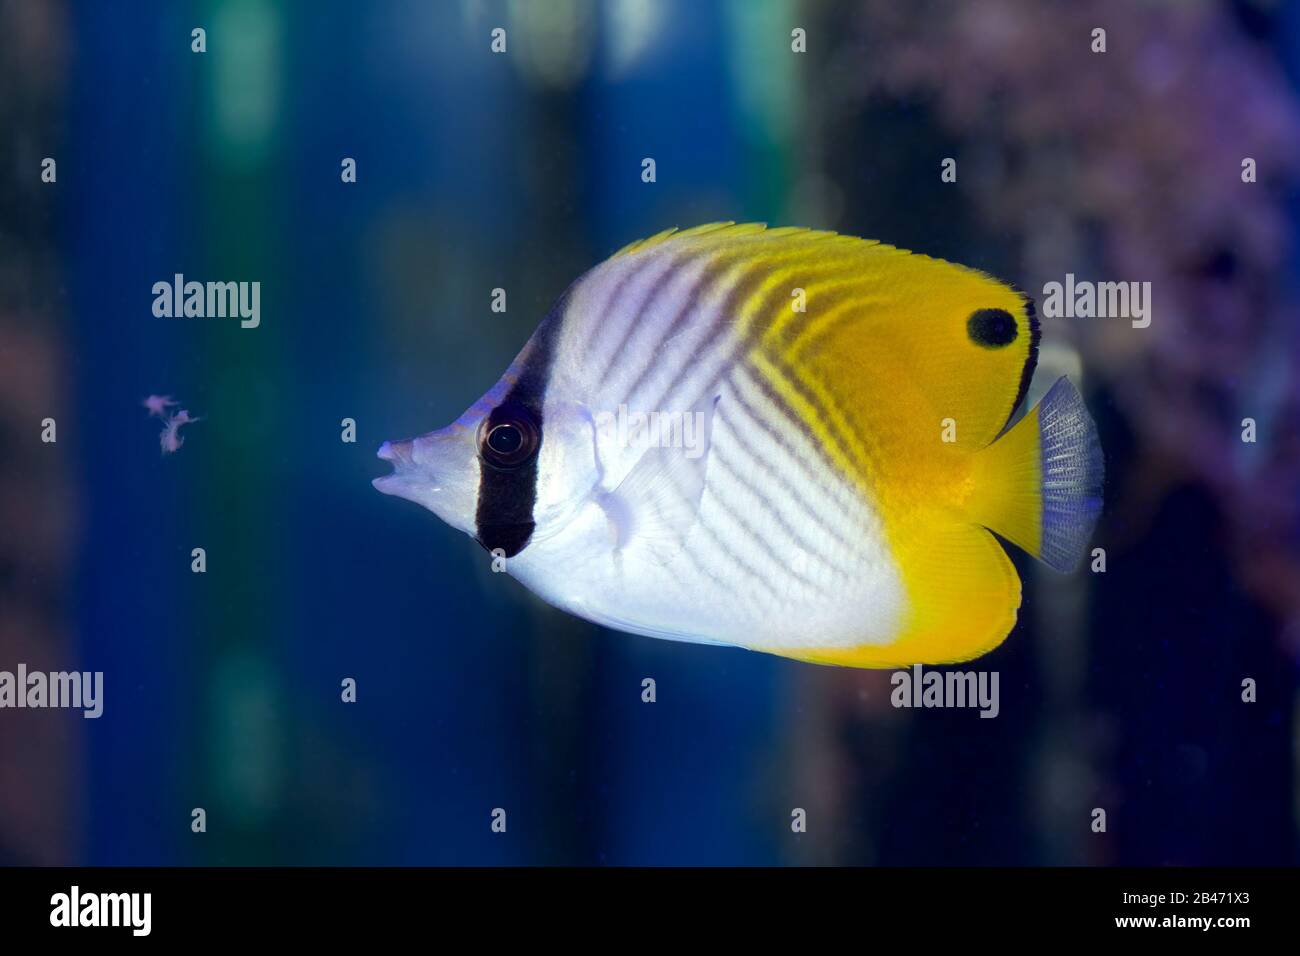 Auriga Butterflyfish, Chaetodon auriga, also known as the Threadfin Butterflyfish, juvenile Stock Photo